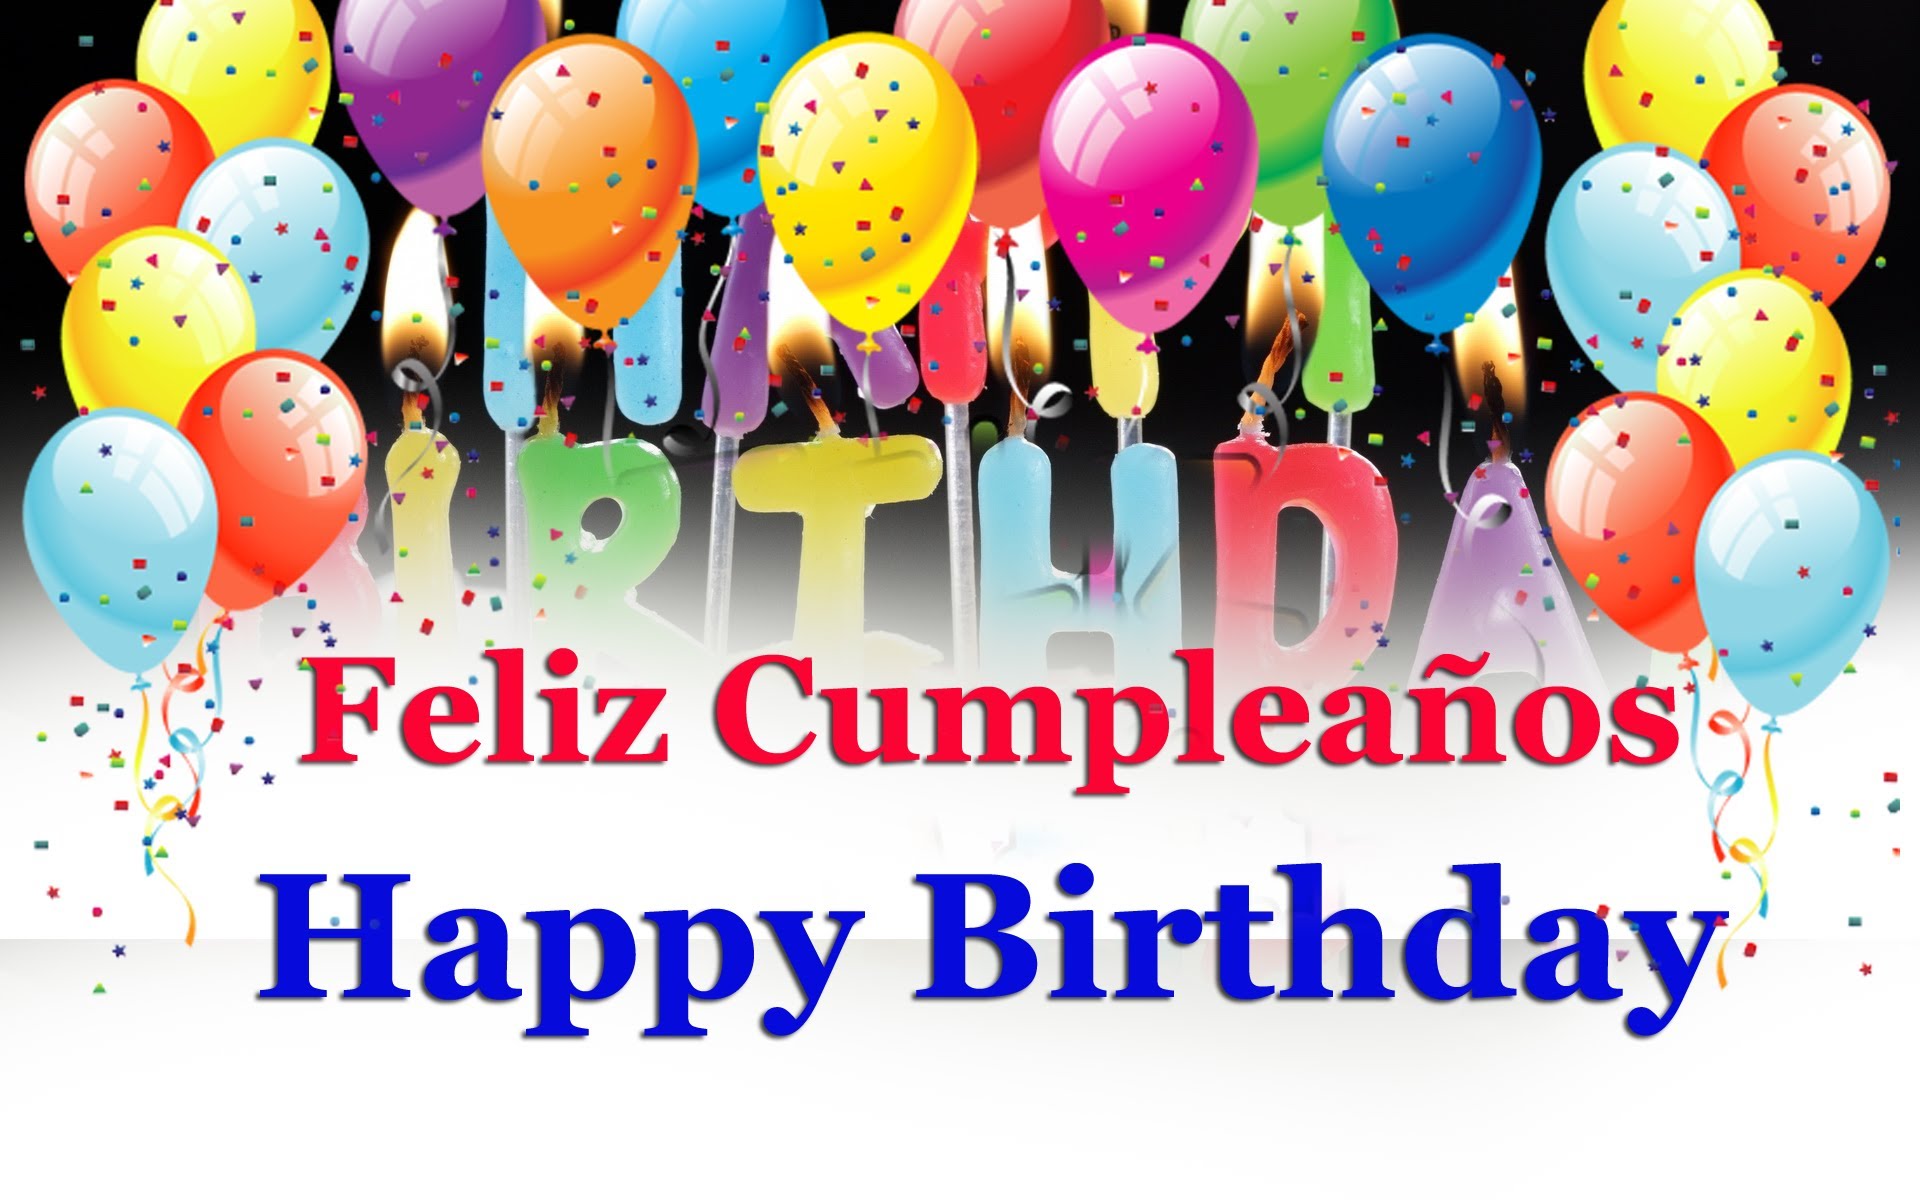 feliz-cumpleanos-happy-birthday-in-spanish.jpg.